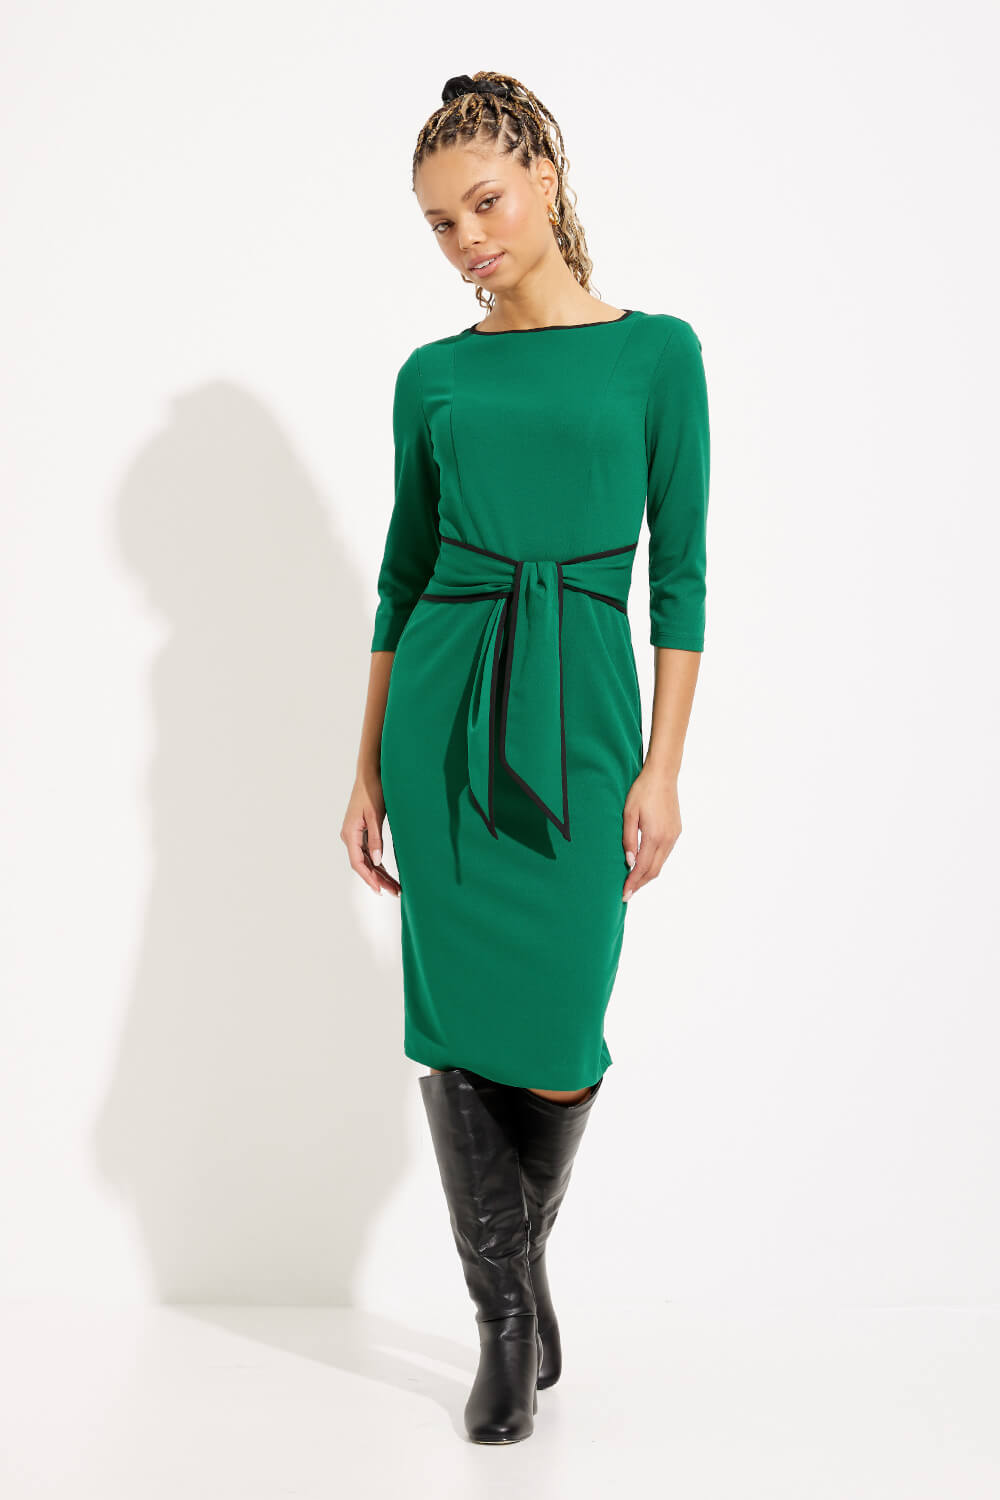 Contrast Trim 3/4 Sleeve Dress Style 221210TT. True Emerald/black